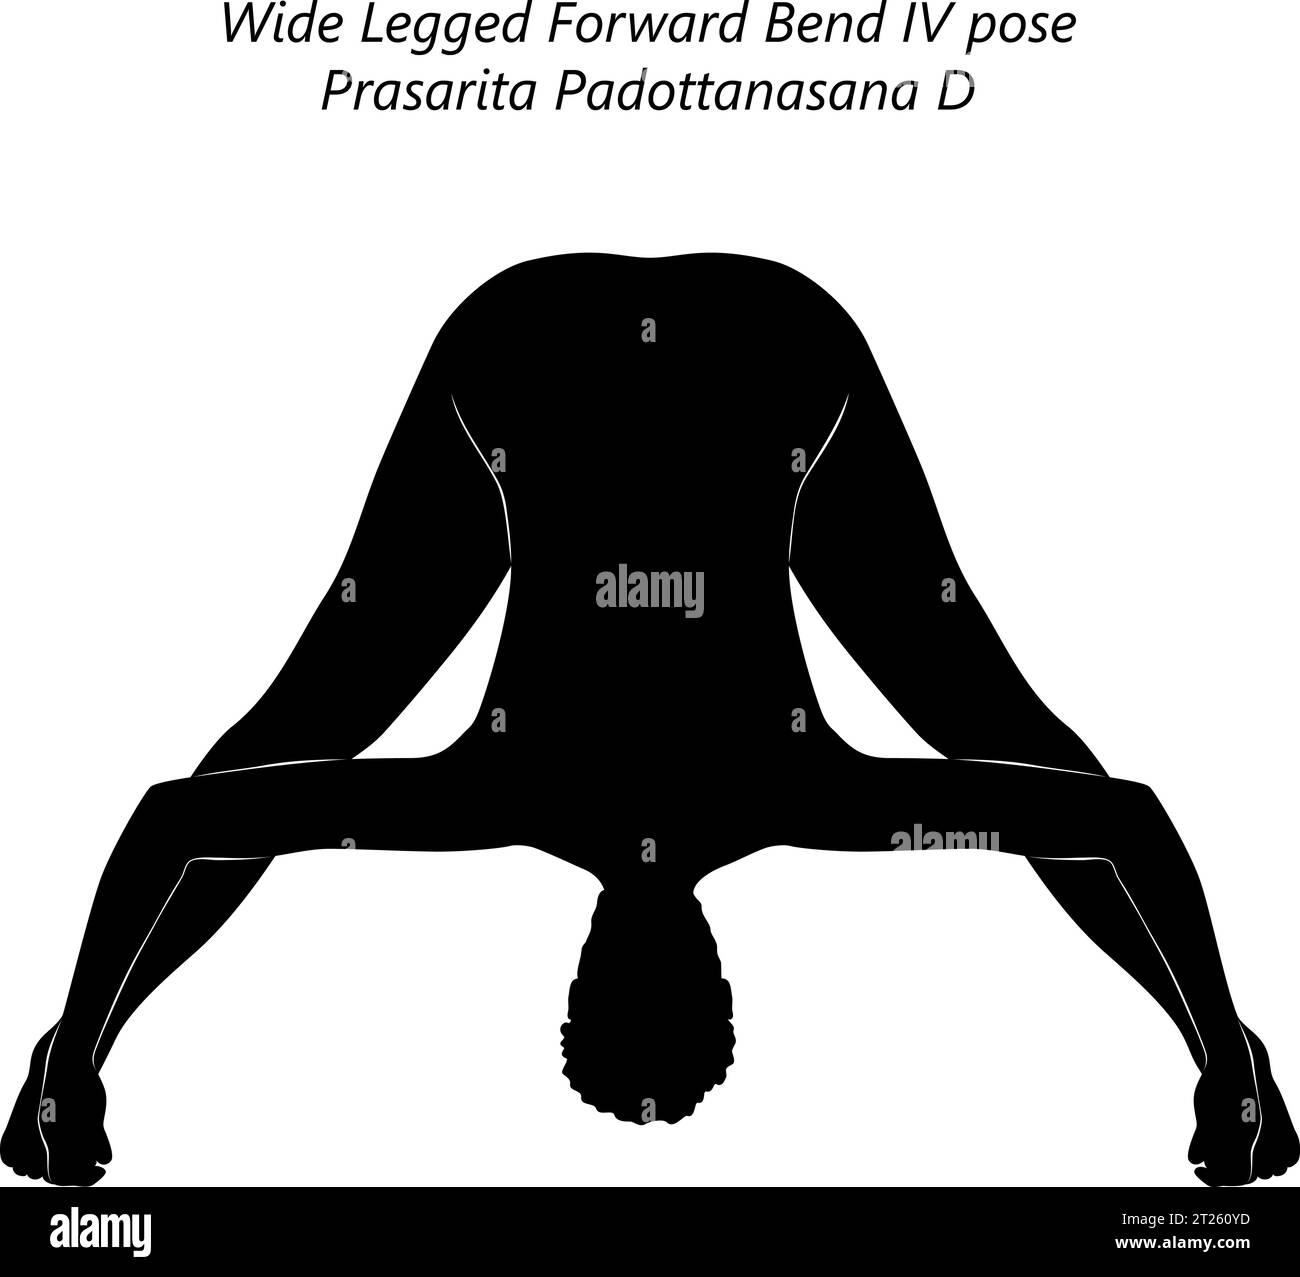 Silhouette of woman doing yoga Prasarita Padottanasana D. Wide Legged Forward Bend 4 pose. Intermediate Difficulty. Isolated vector illustration. Stock Vector